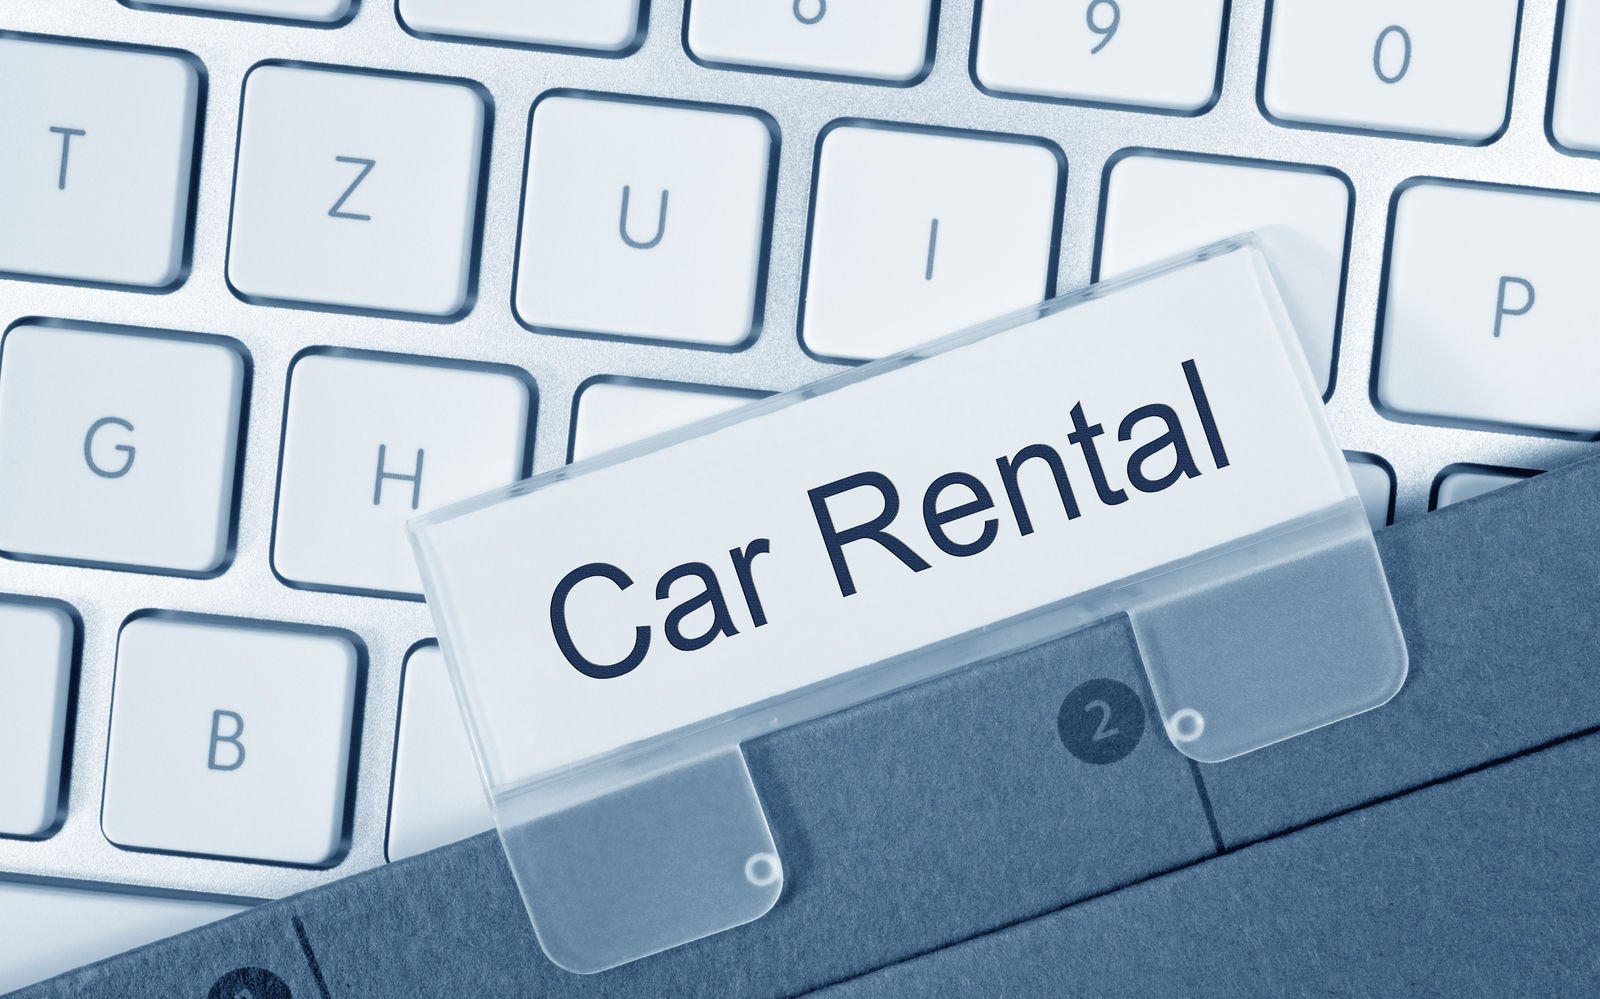 Hertz Rental Car Insurance: Should you buy it?